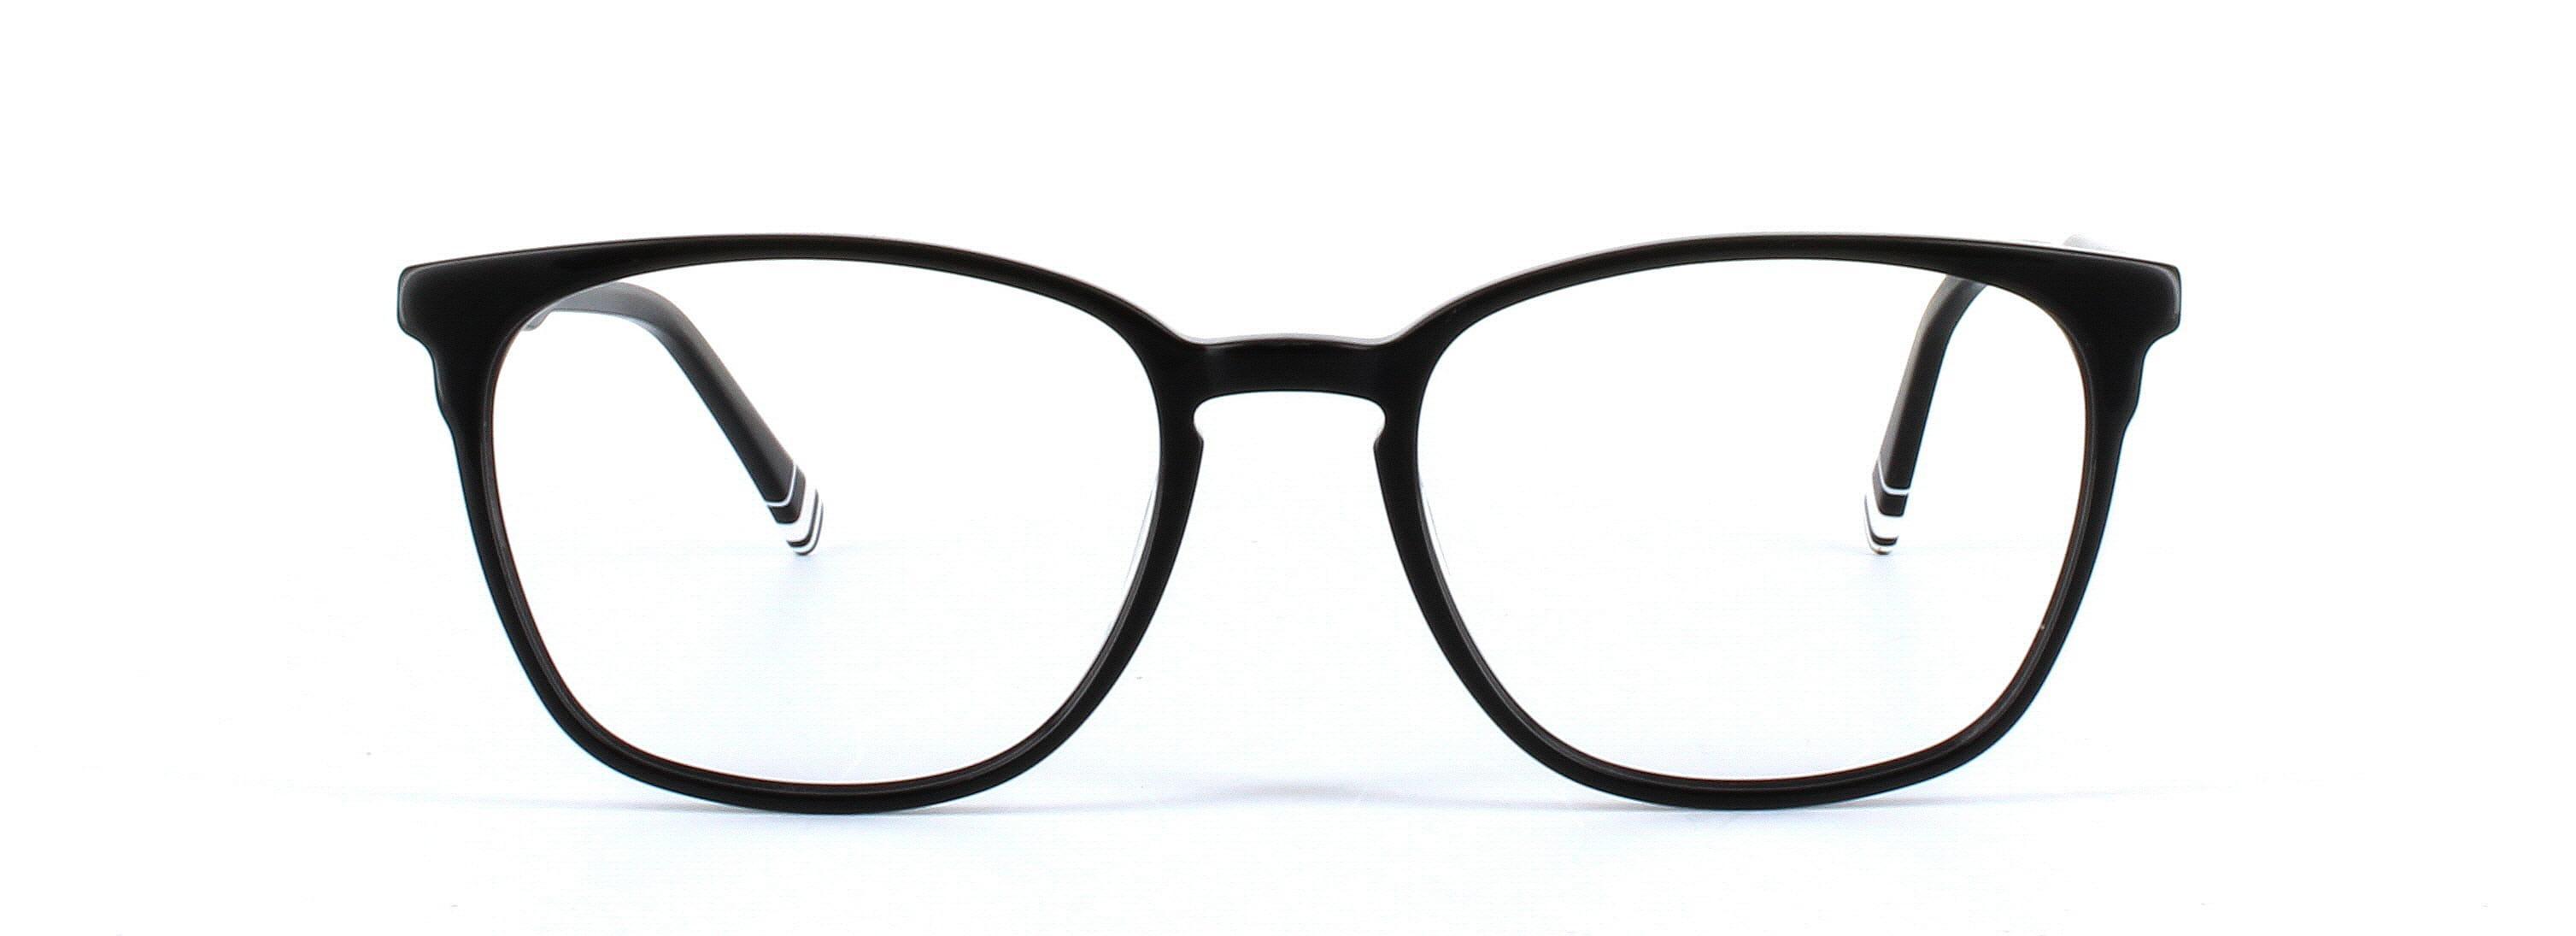 Astley Black Full Rim Round Acetate Glasses - Image View 5